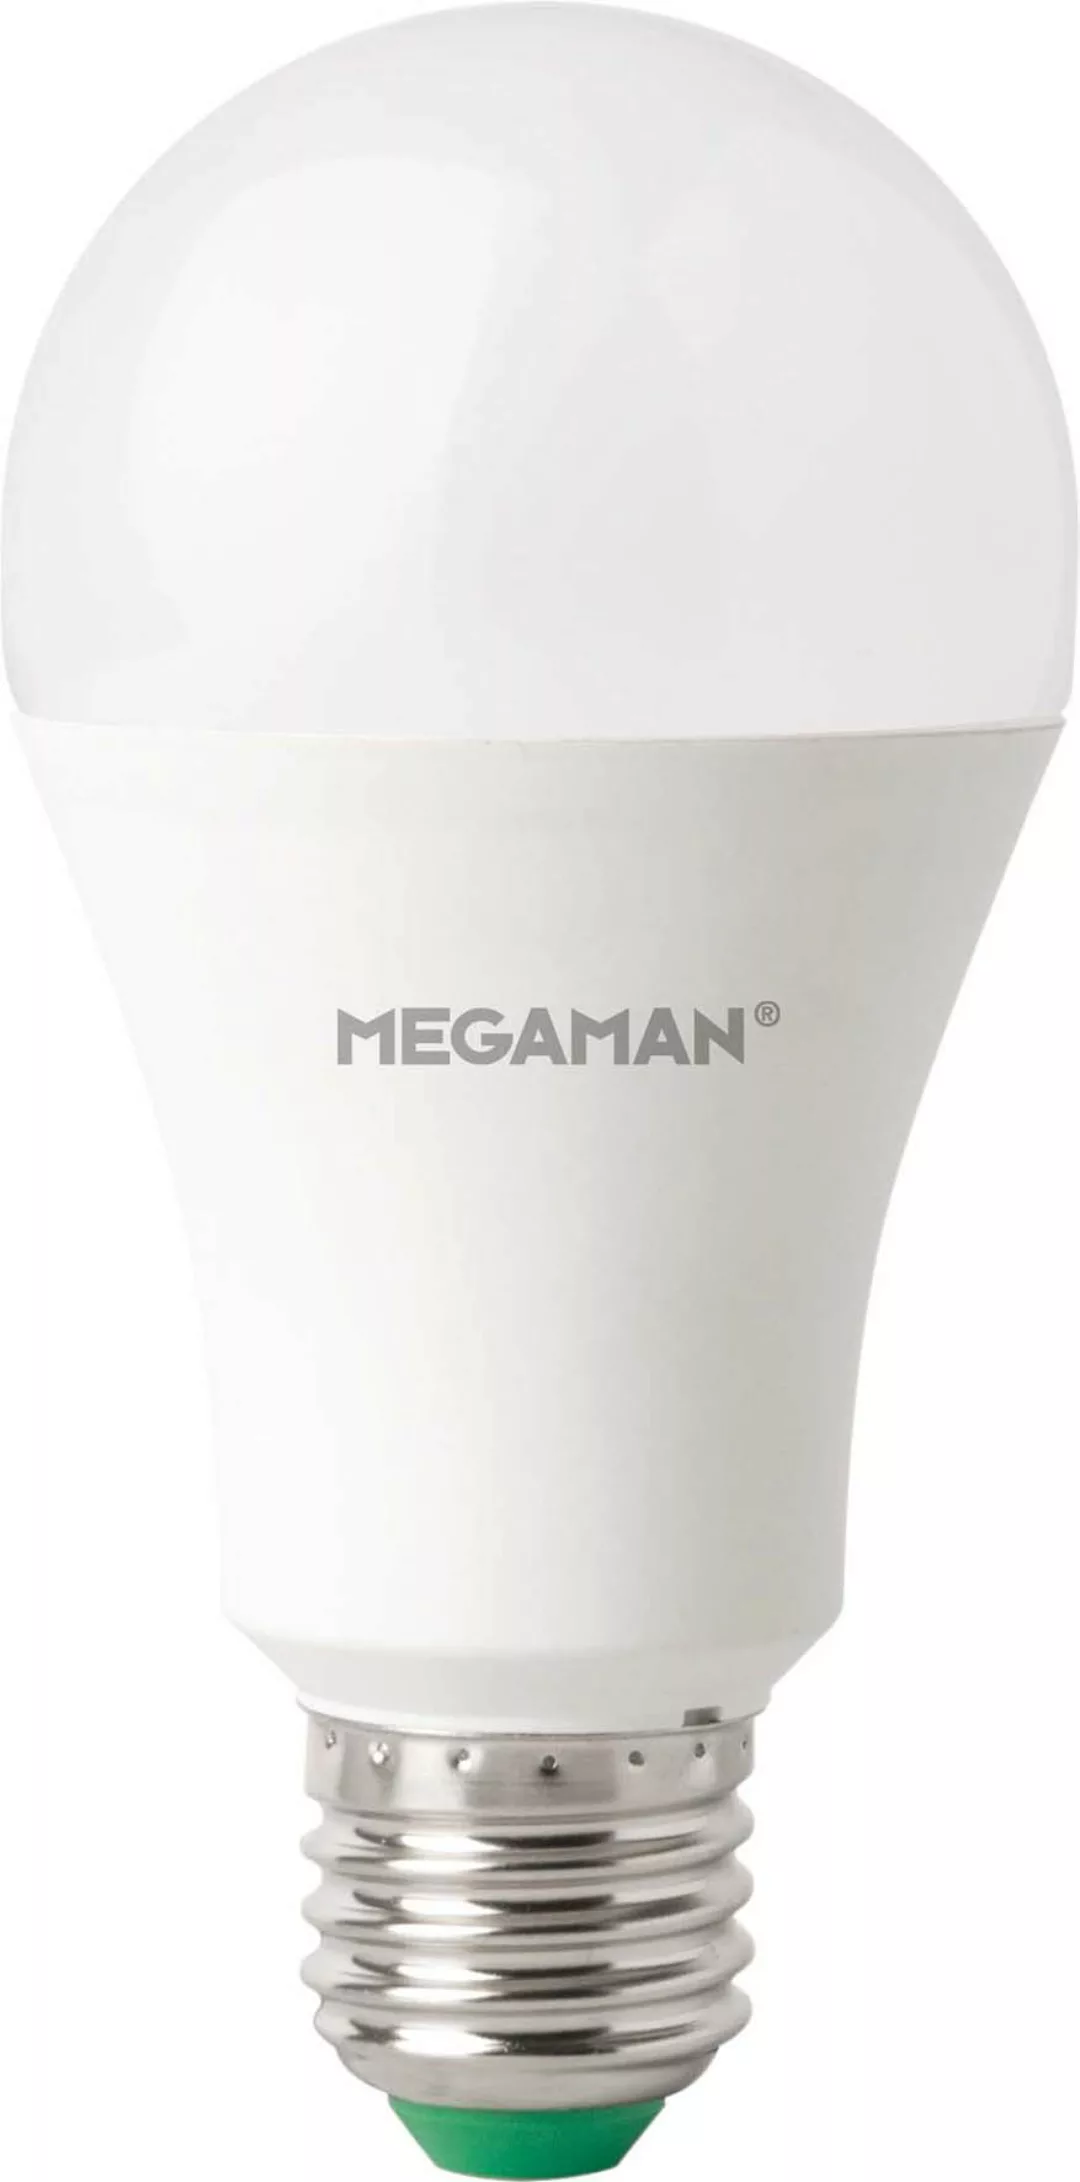 Megaman LED-Lampe E27 2800K MM21138 günstig online kaufen